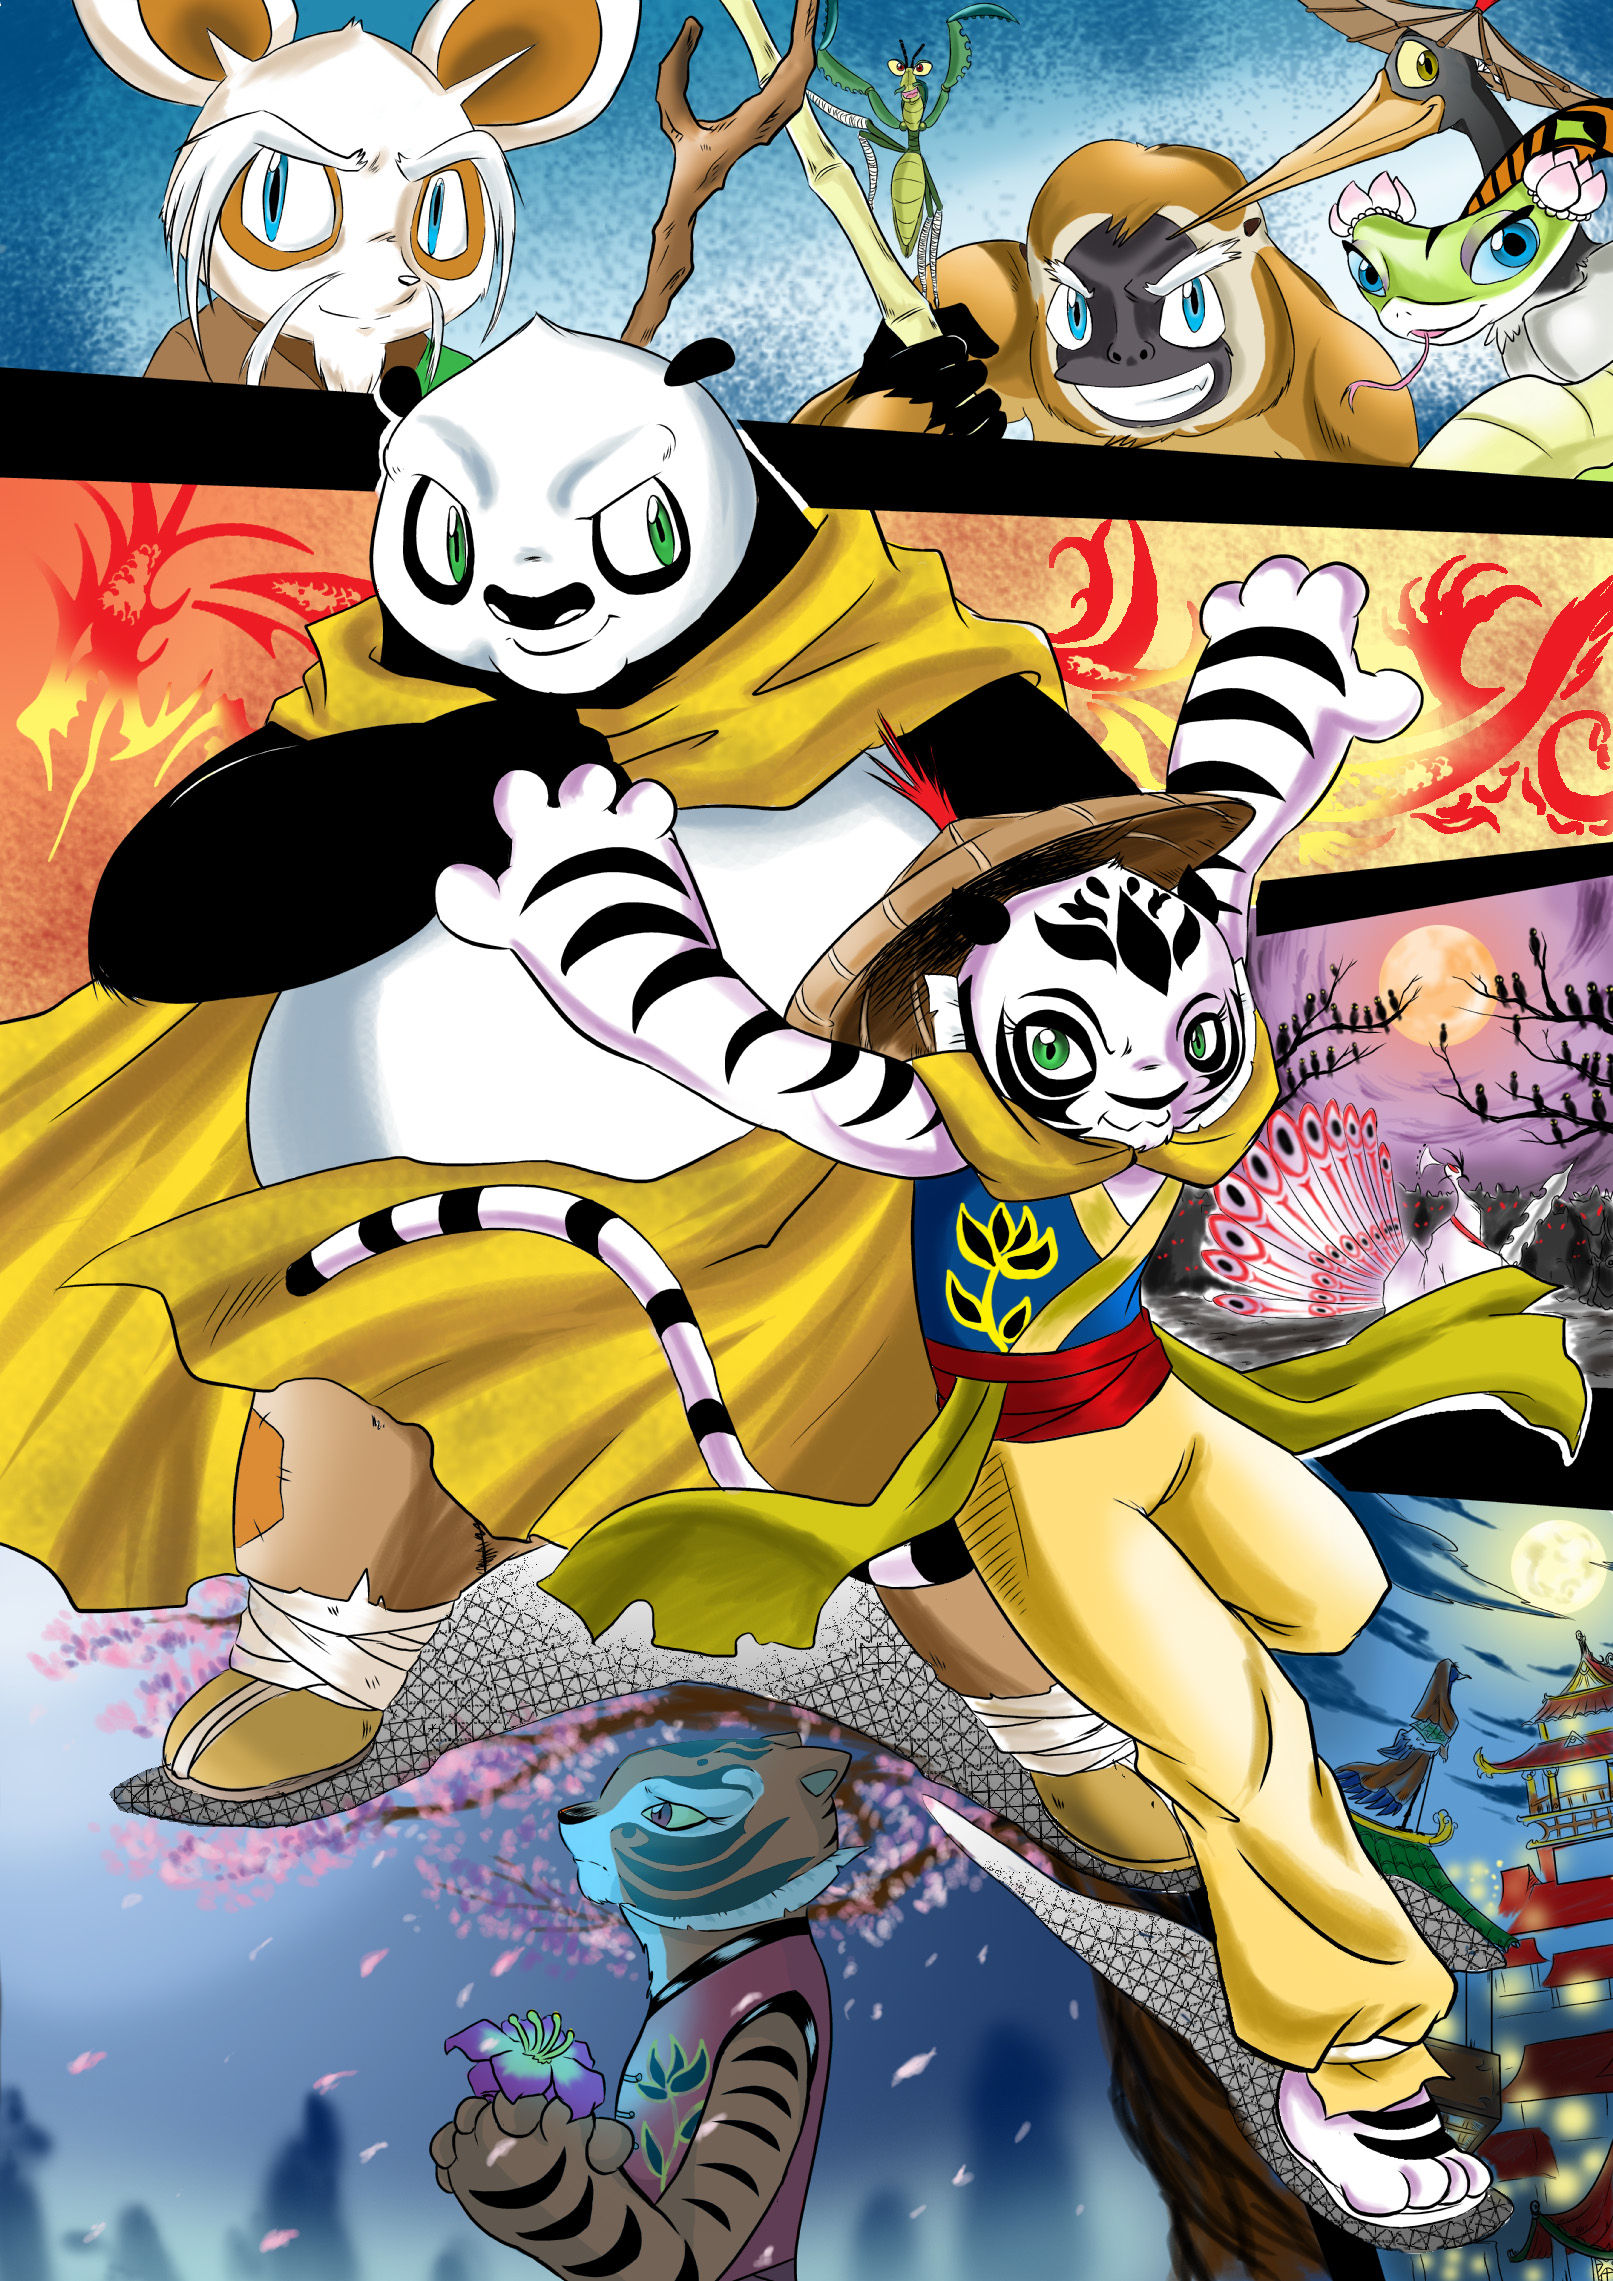 Fanfiction and Fanpoetry on Kung-Fu-Panda-Pals - DeviantArt.